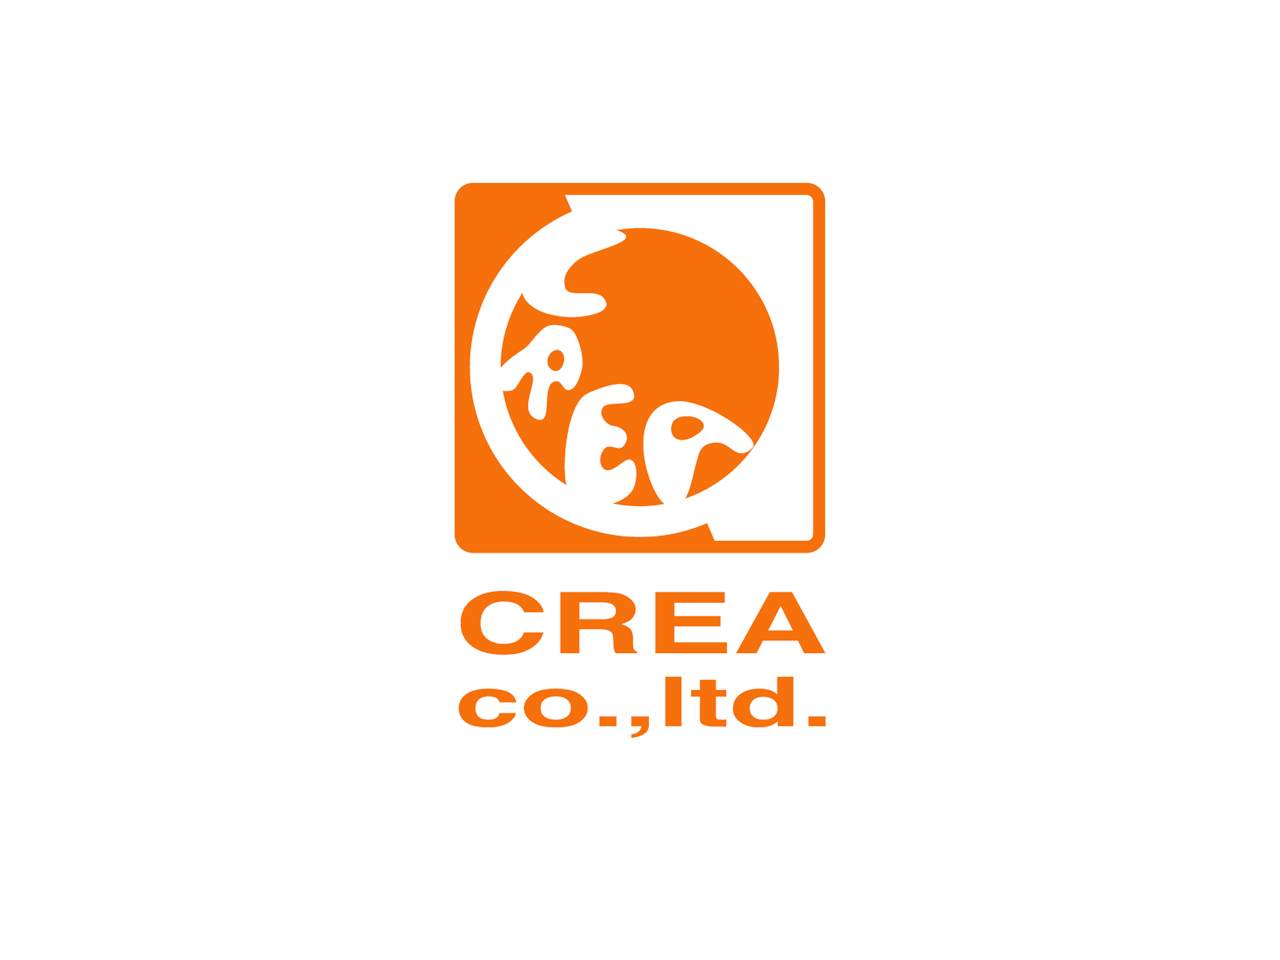 CREA news